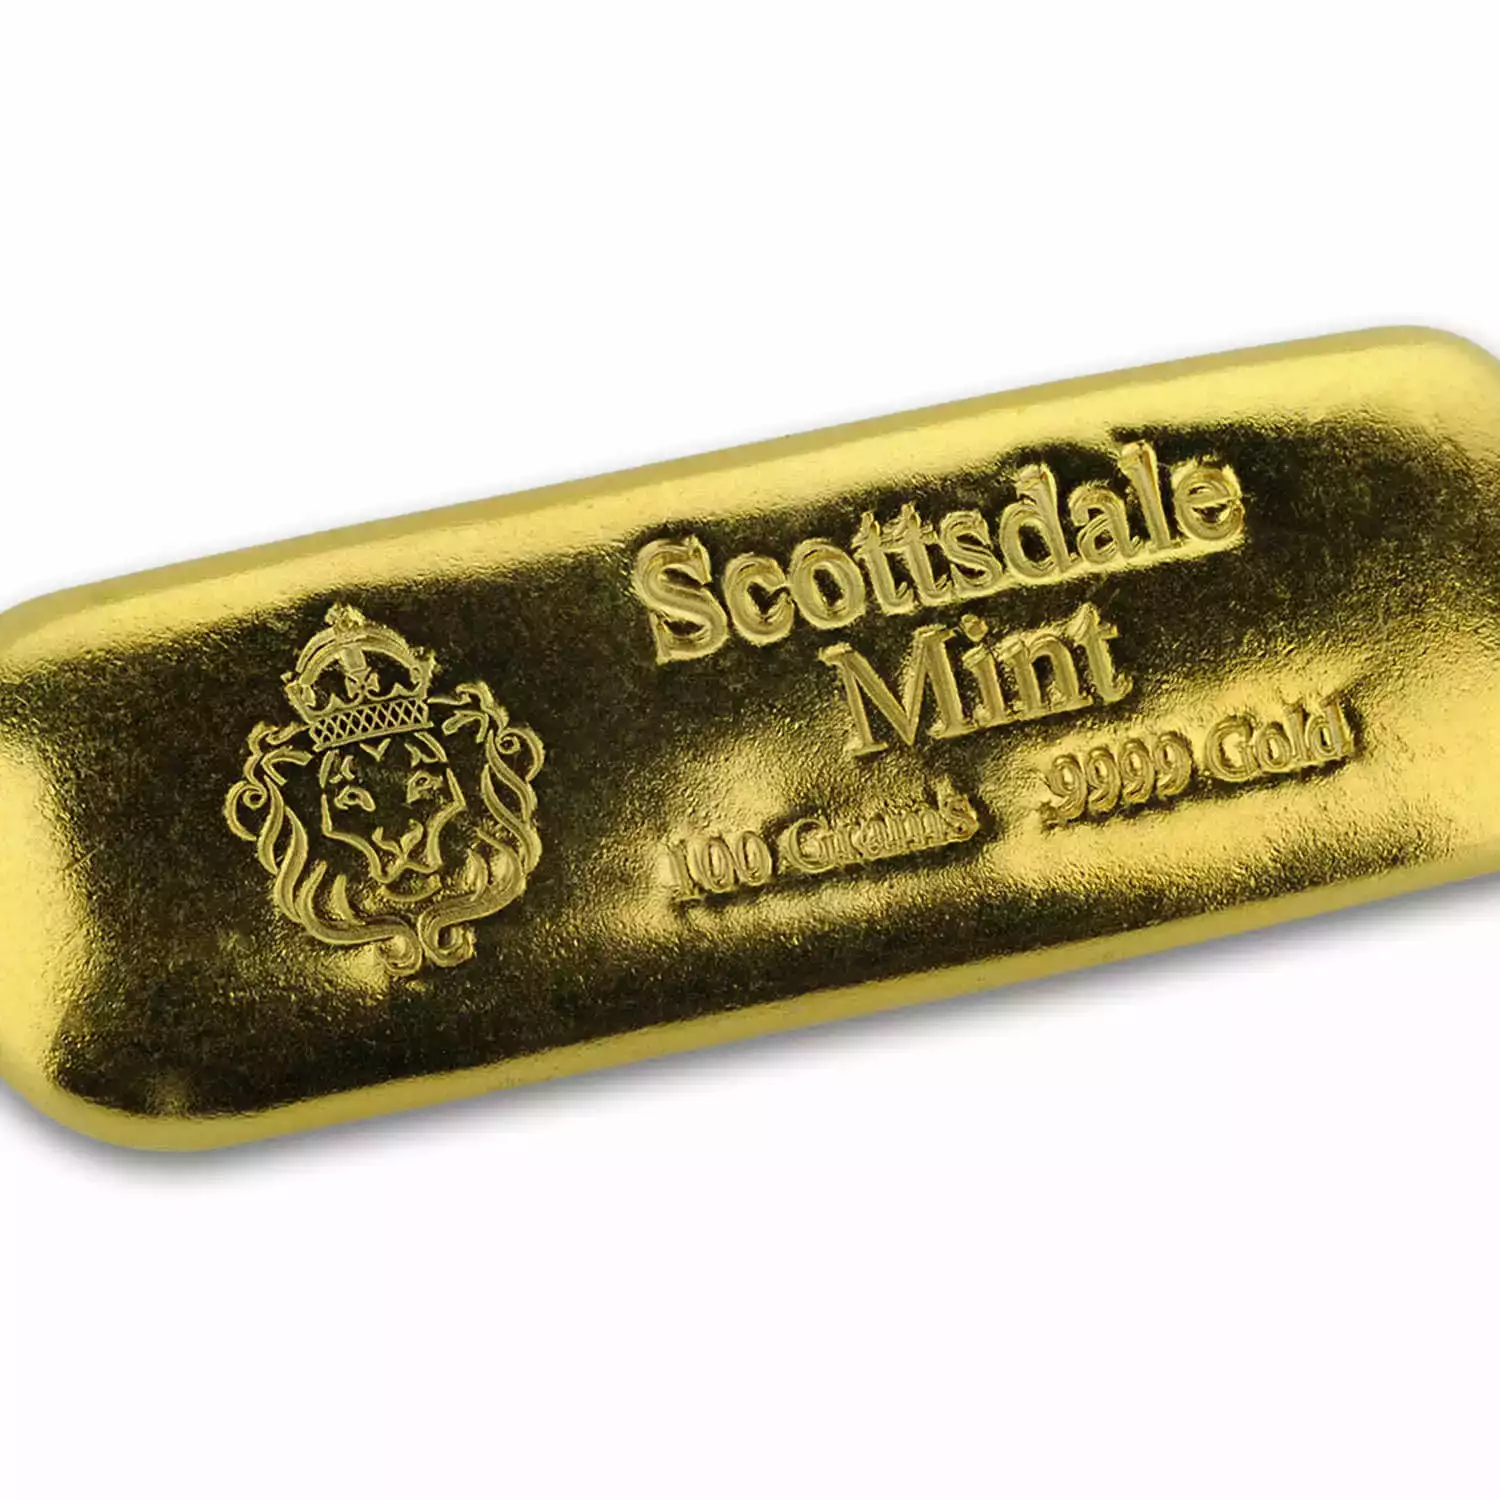 Scottsdale Mint 100g Gold Lion Bar (4)